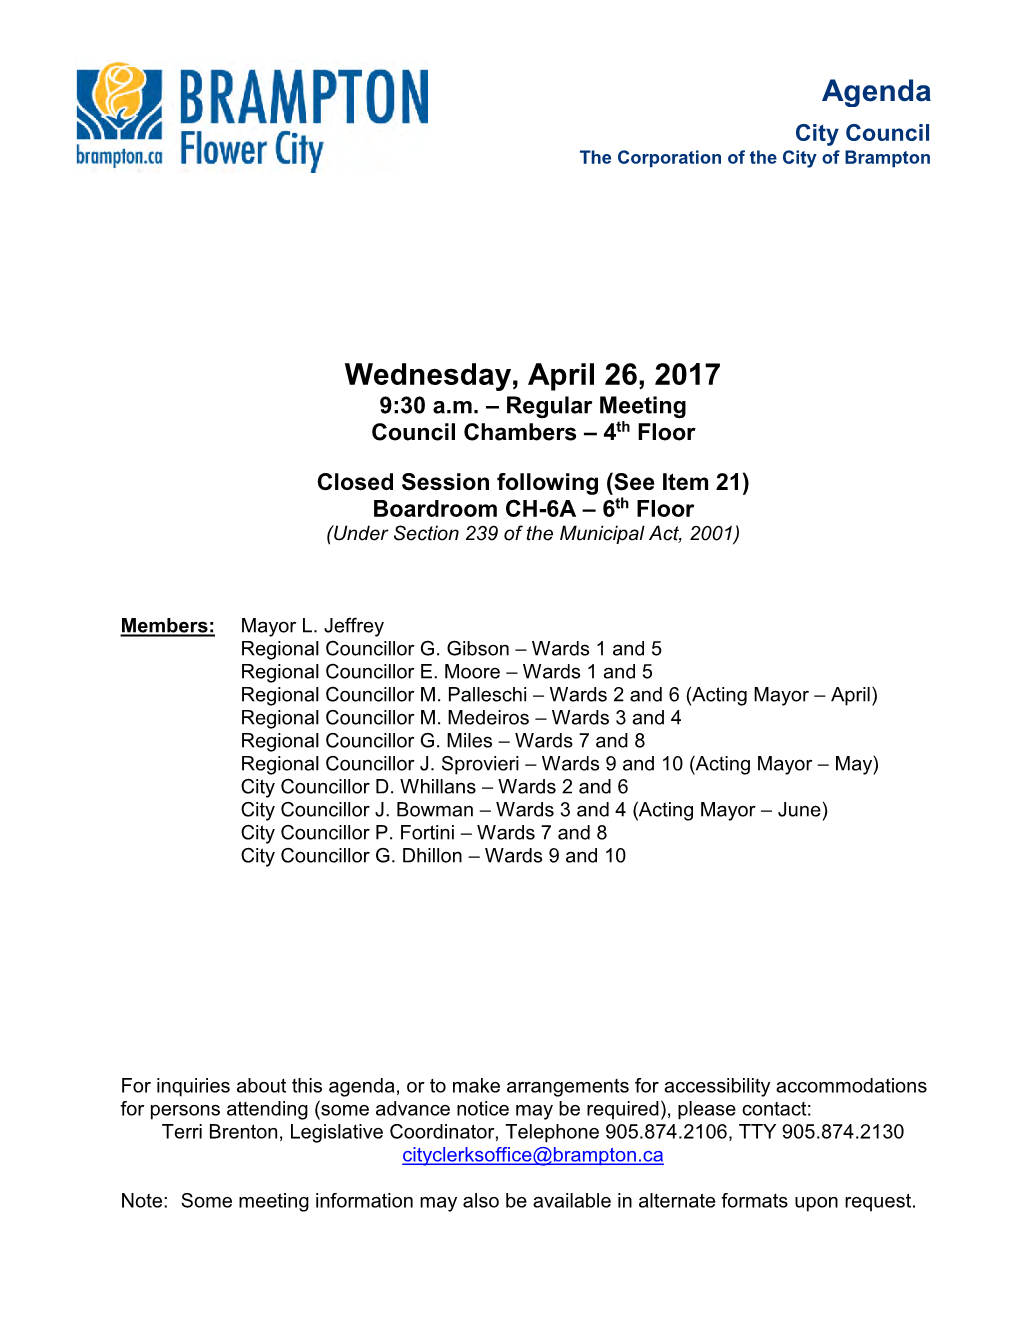 City Council Agenda for April 26, 2017